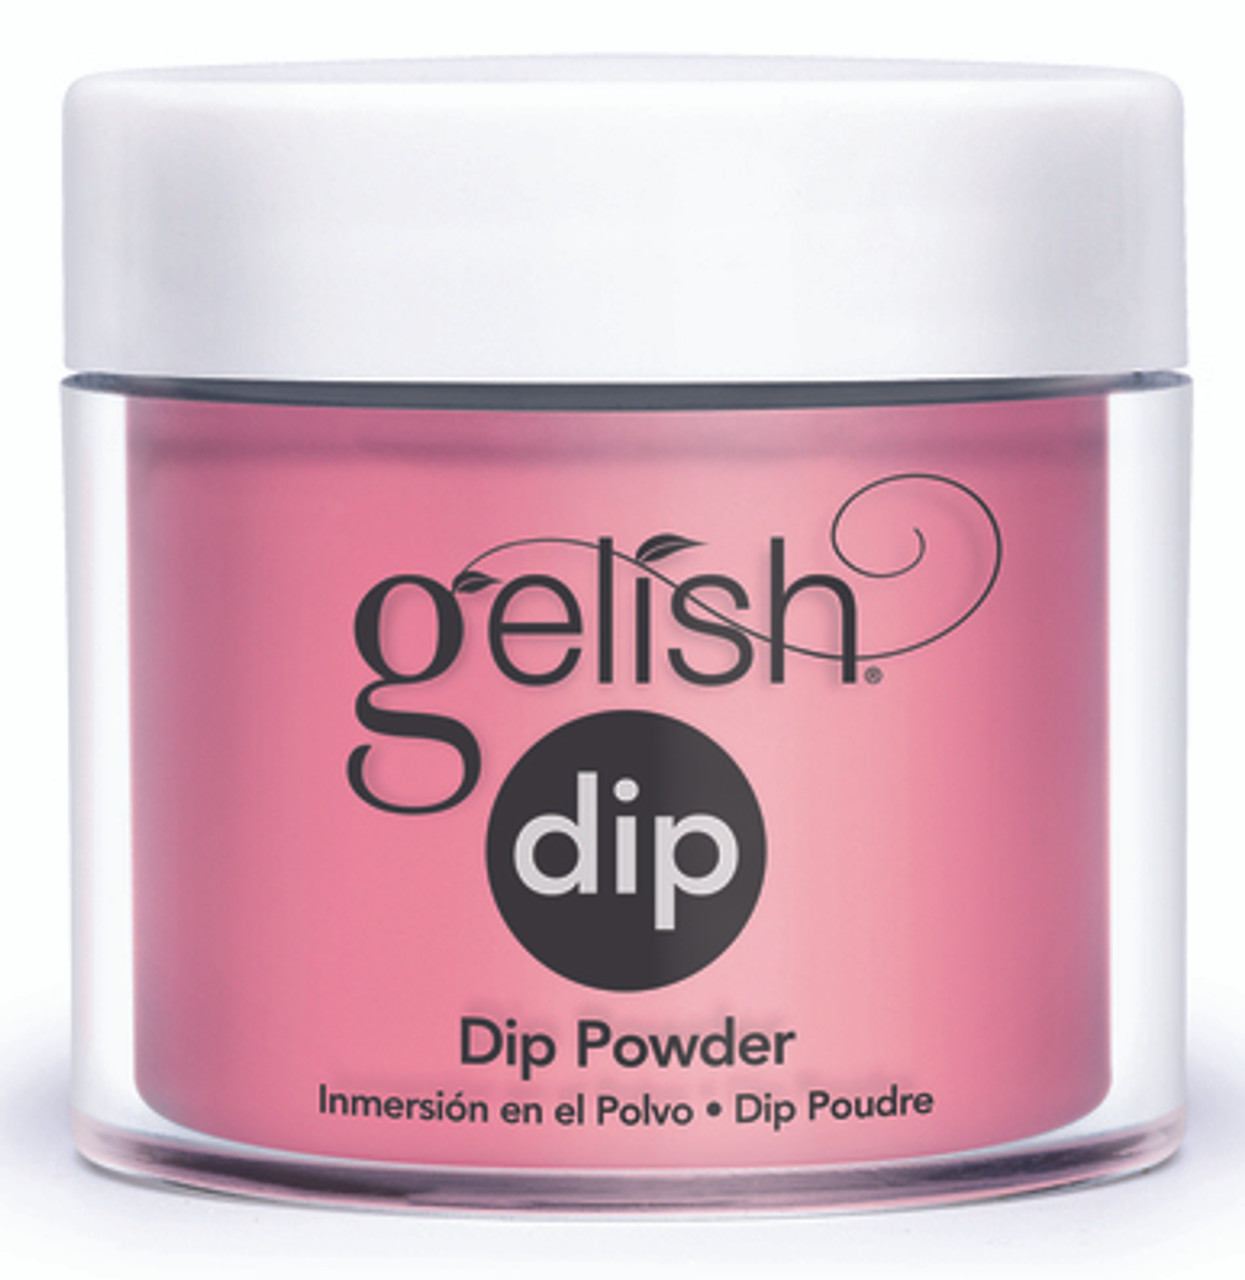 Gelish Dip Powder Beauty Marks The Spot - 0.8 oz / 23 g